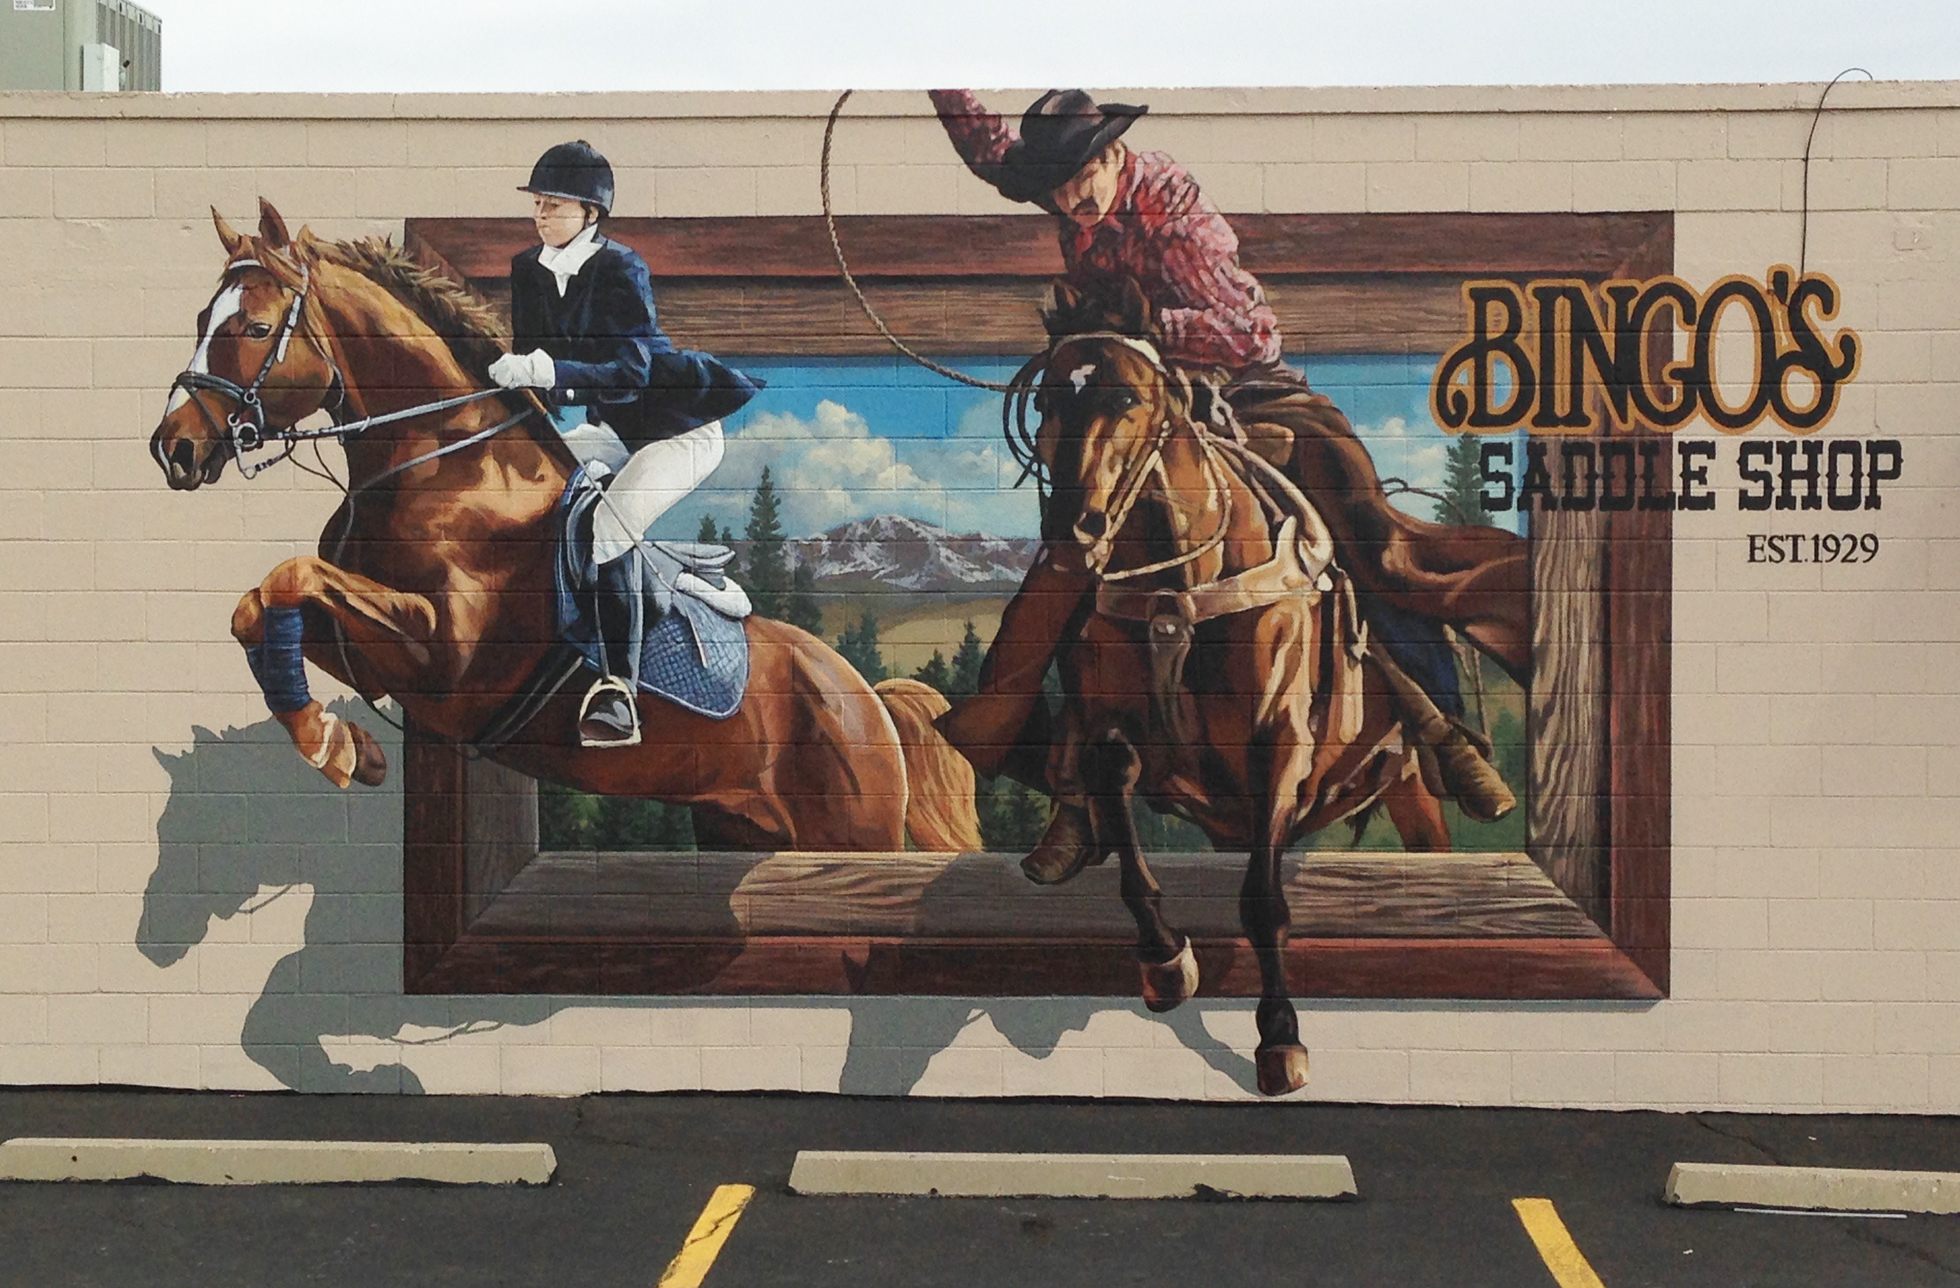 Bingo's Saddle Shop